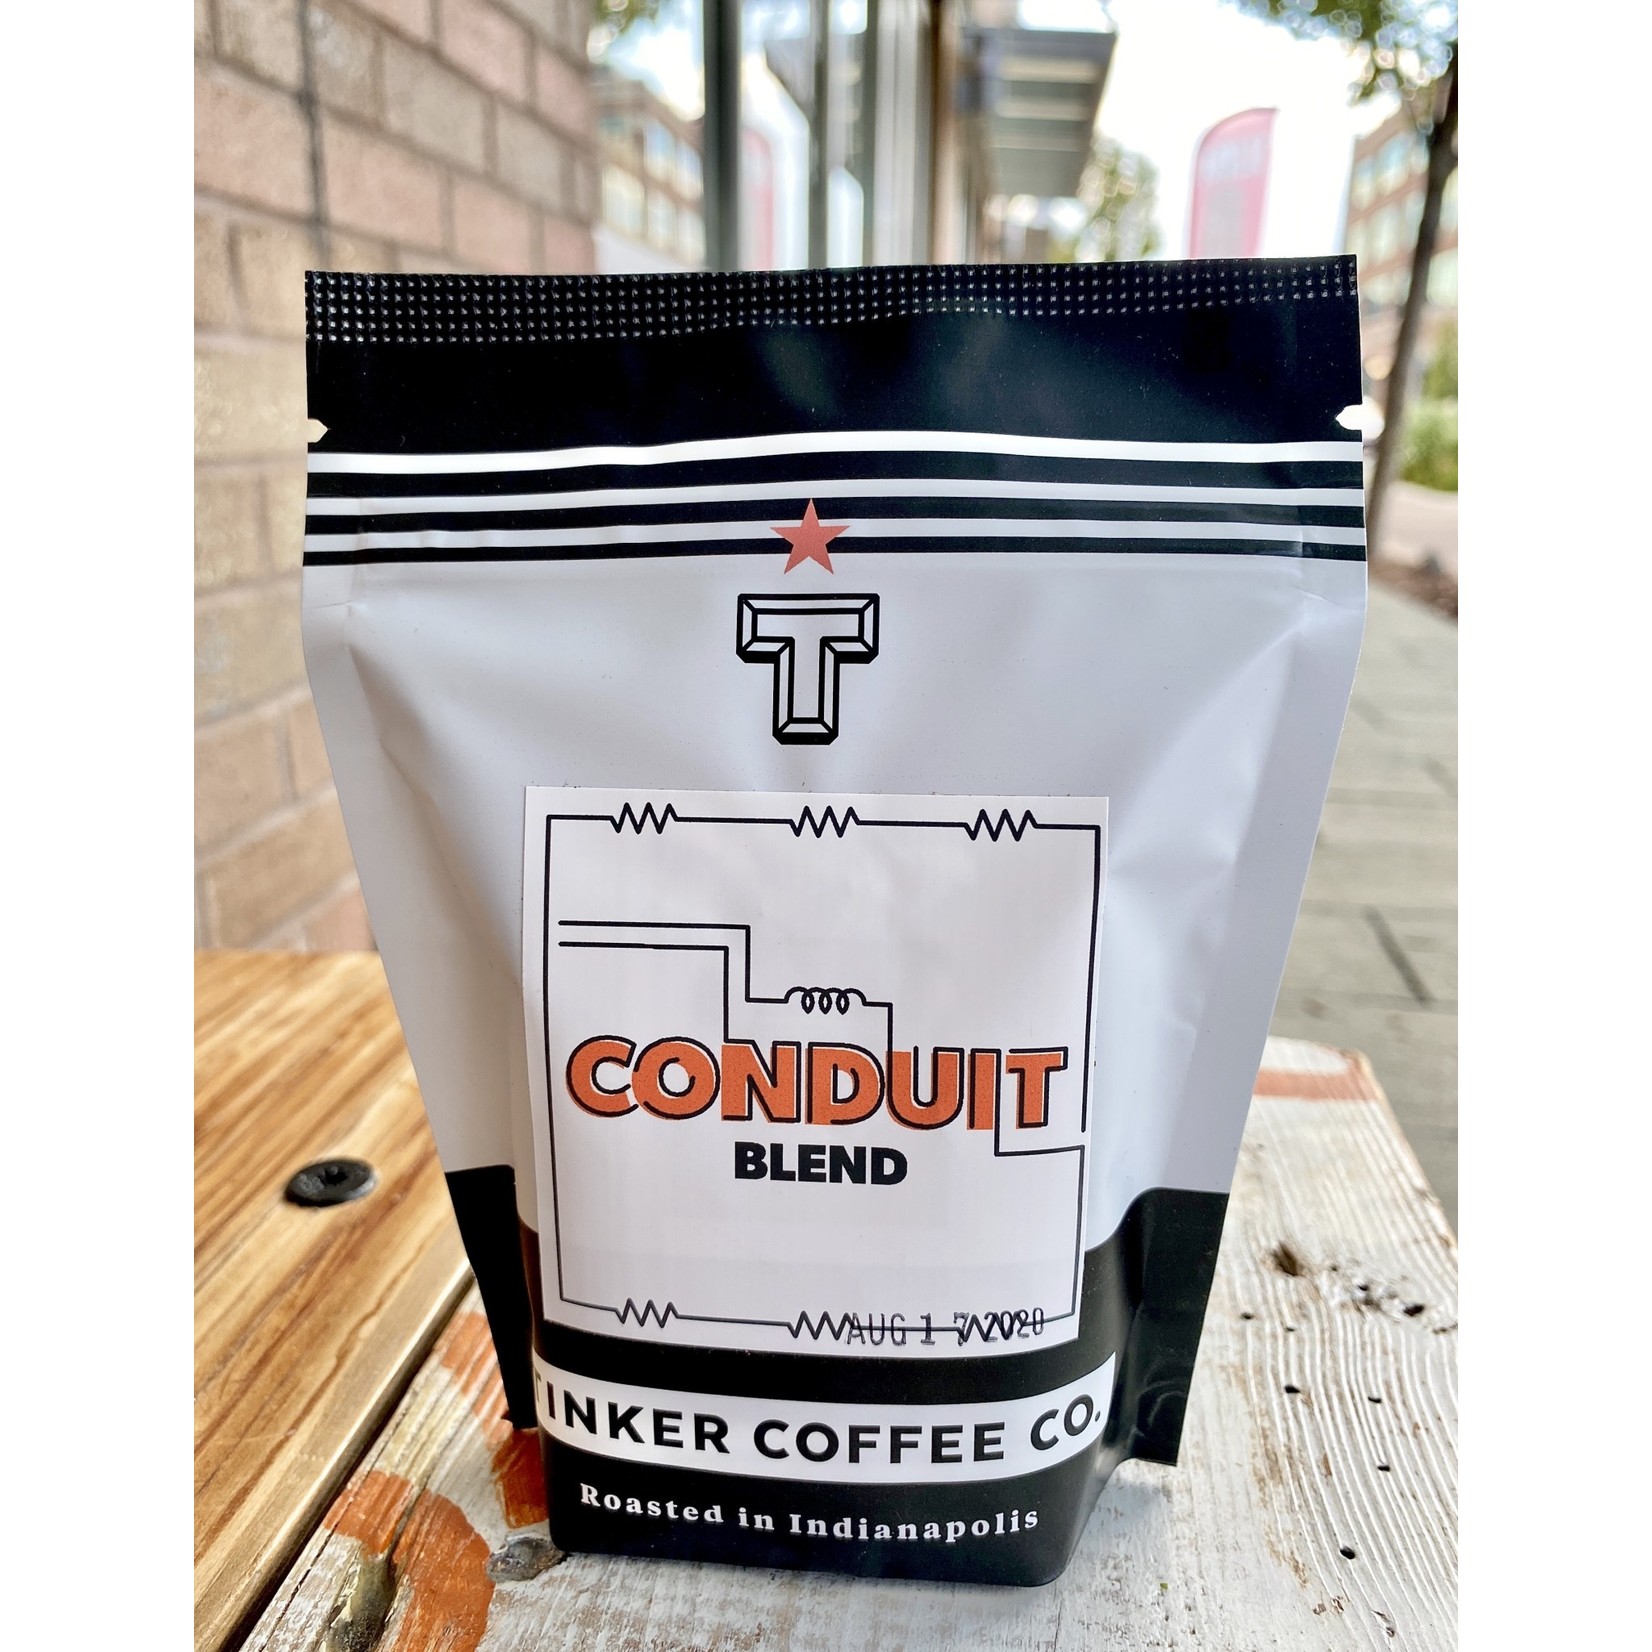 Tinker Coffee Co. Conduit Blend Whole Bean Coffee 4oz. Bag